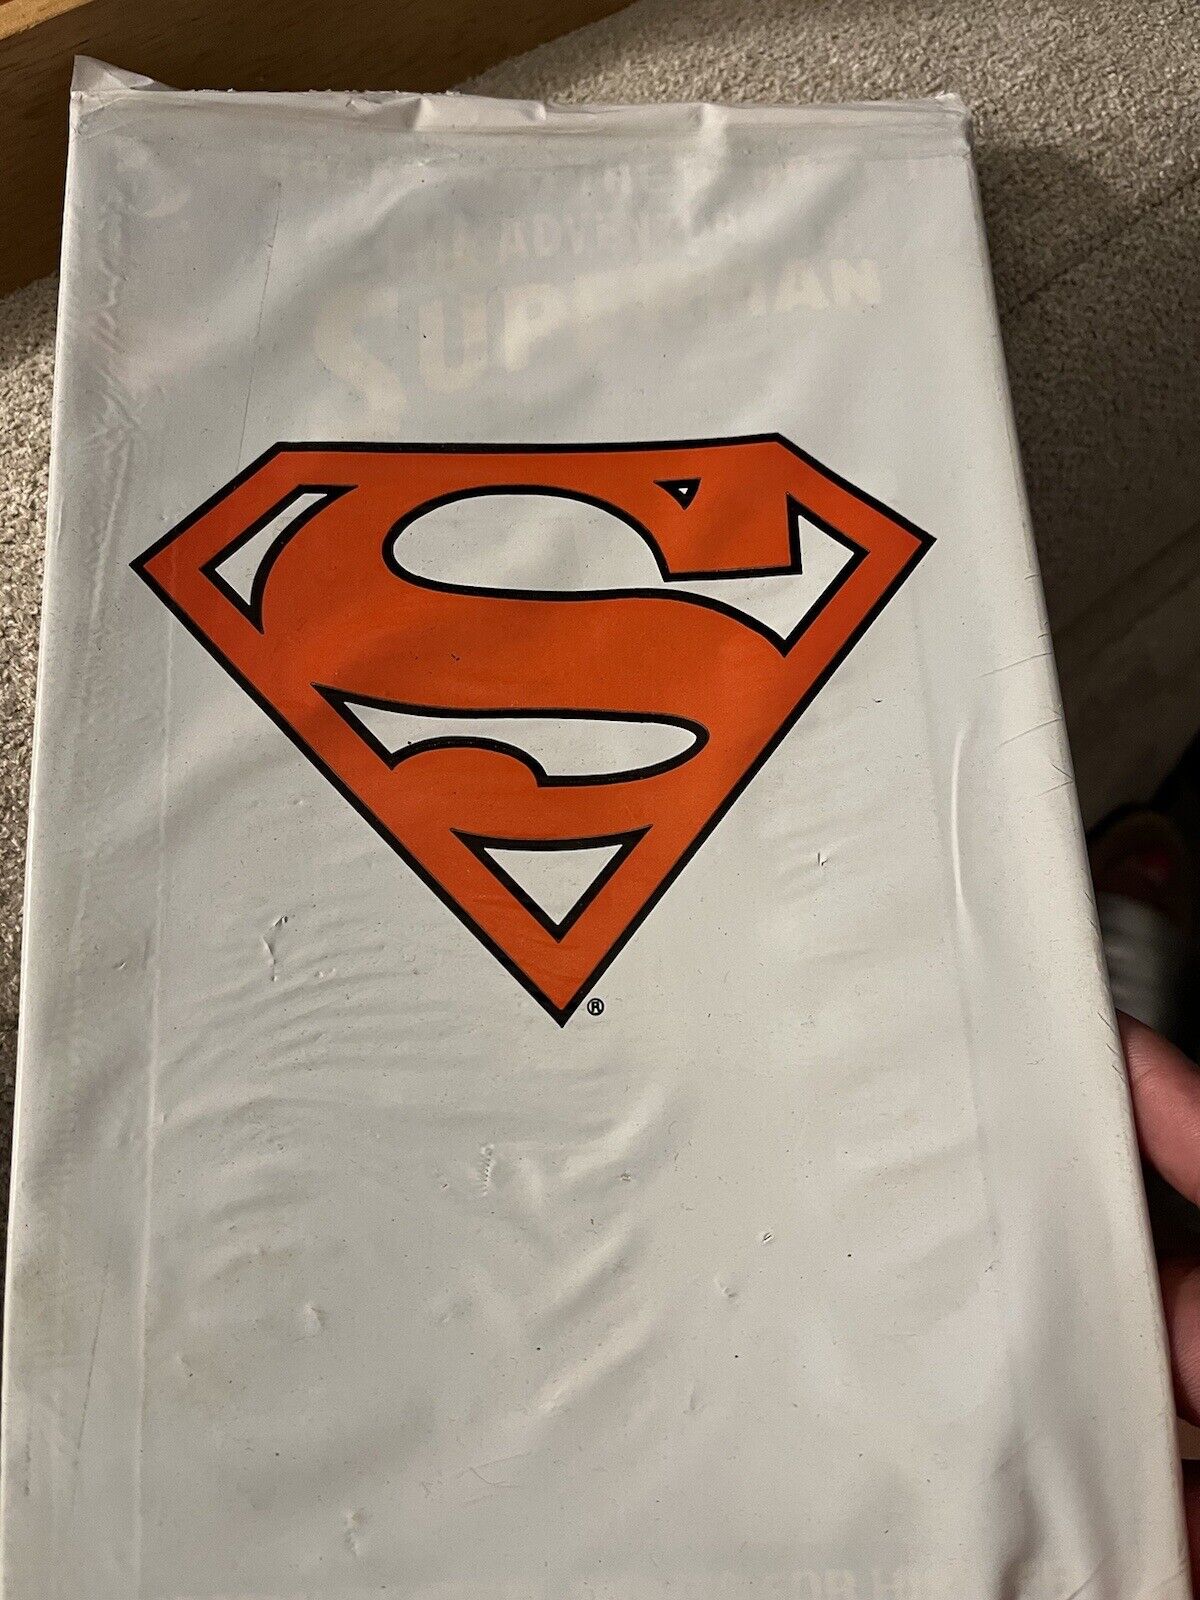 Superman Collector's Set #500 Sealed Bag 1993 Skybox Death of Superman DC Comics